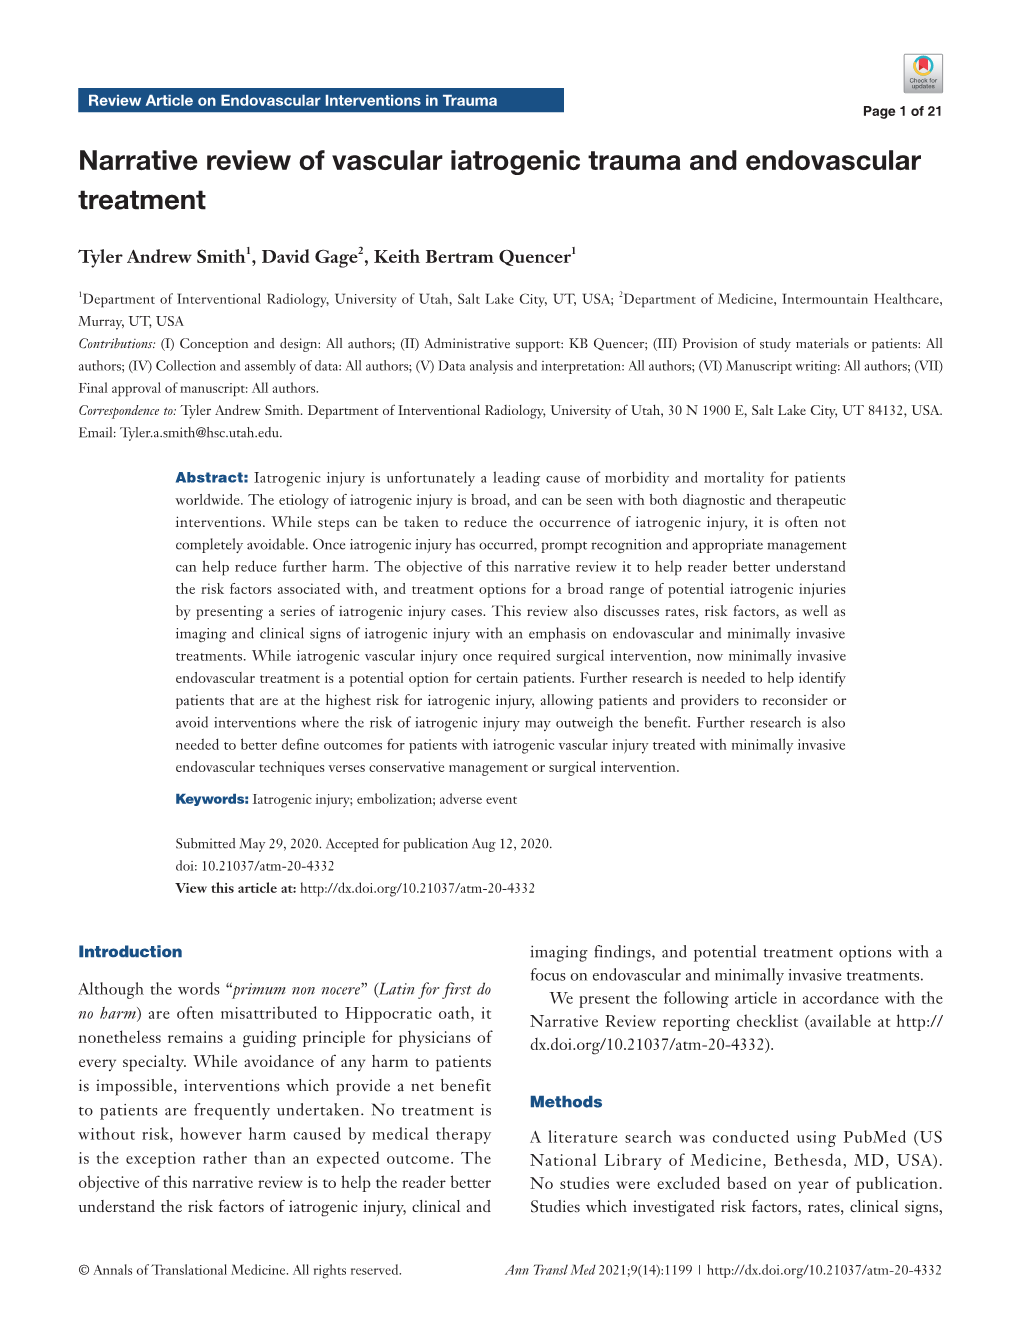 Narrative Review of Vascular Iatrogenic Trauma and Endovascular Treatment